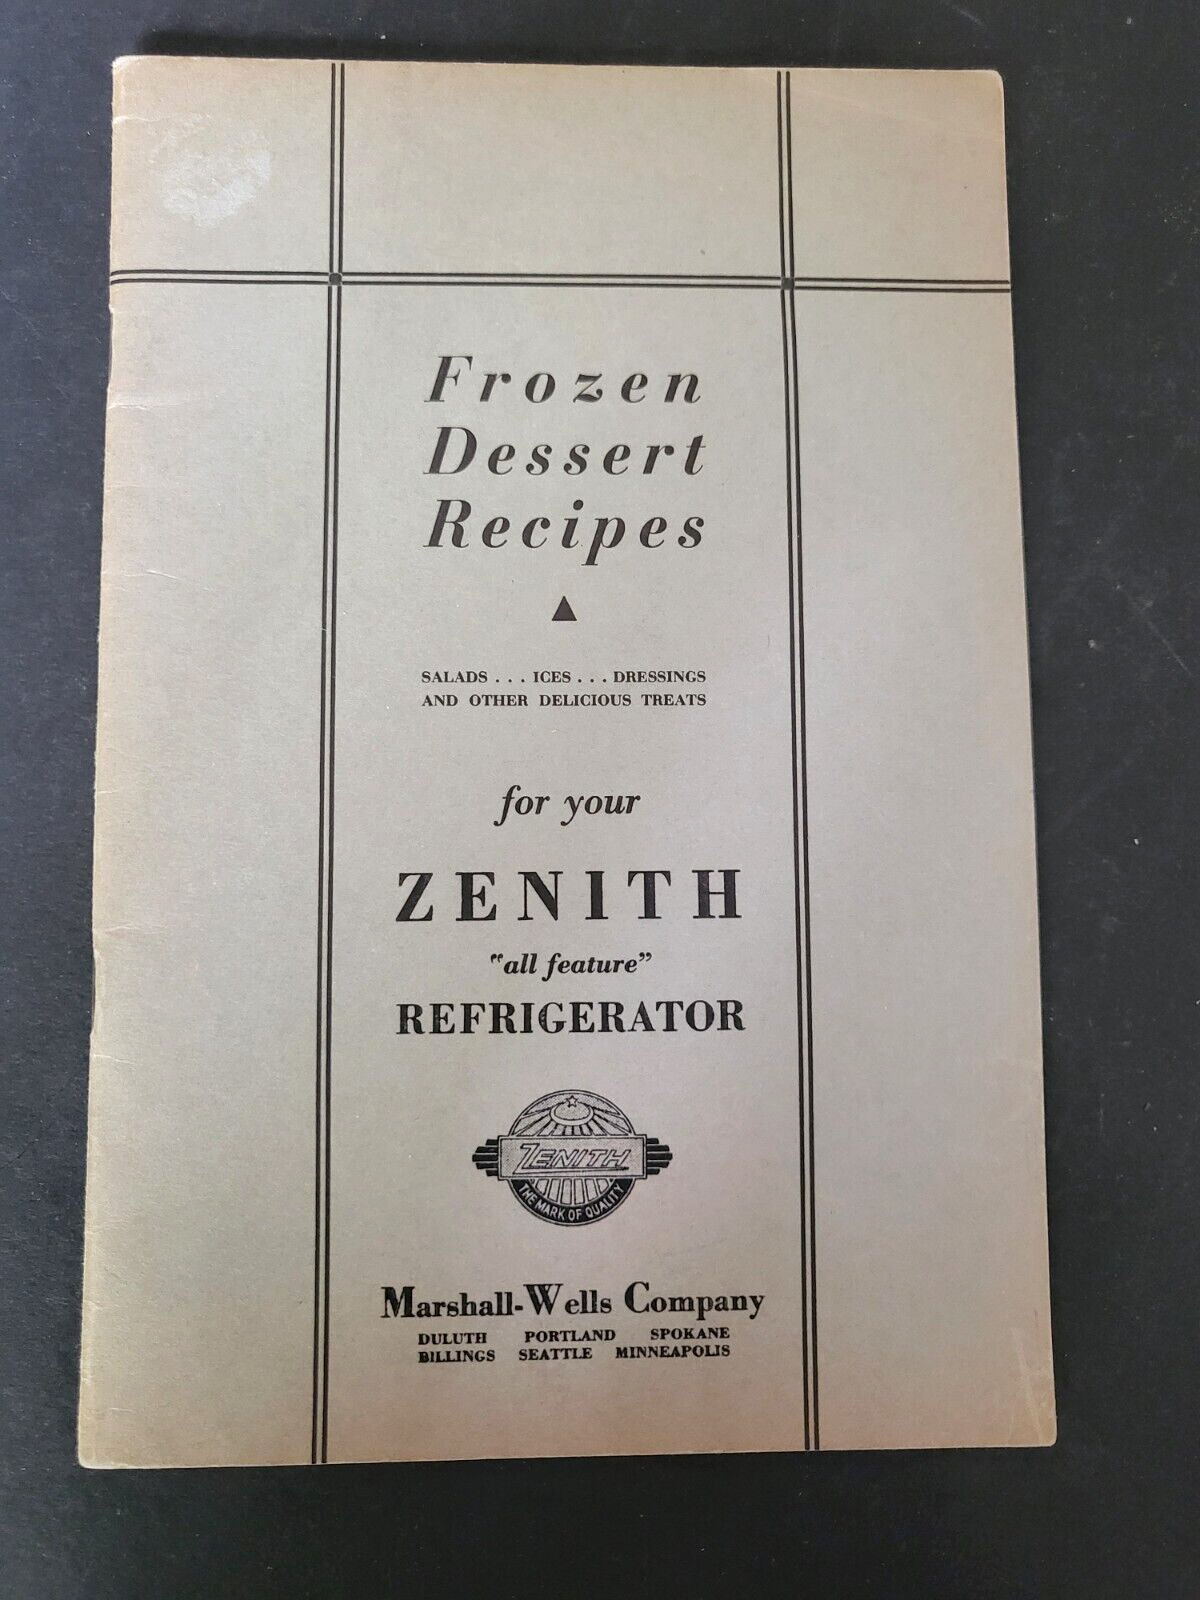 Vintage 1930s Frozen Dessert Recipes, Cookbook  For Your Zenith Refrigerator